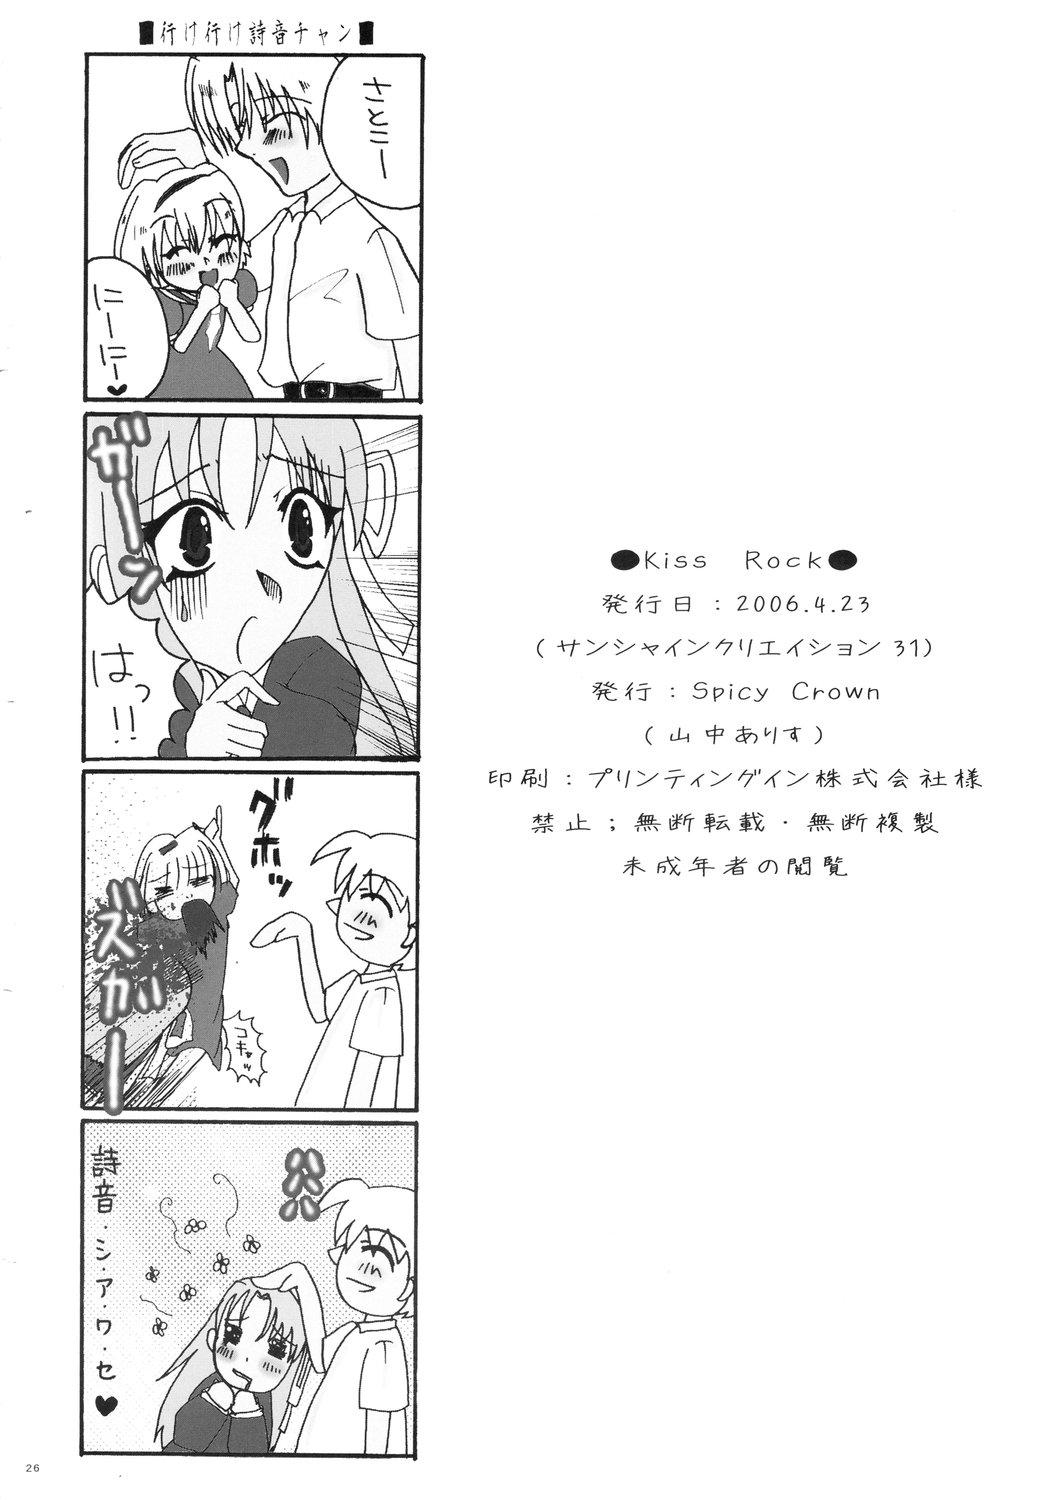 Nudes Kiss Rock - Higurashi no naku koro ni Cams - Page 26